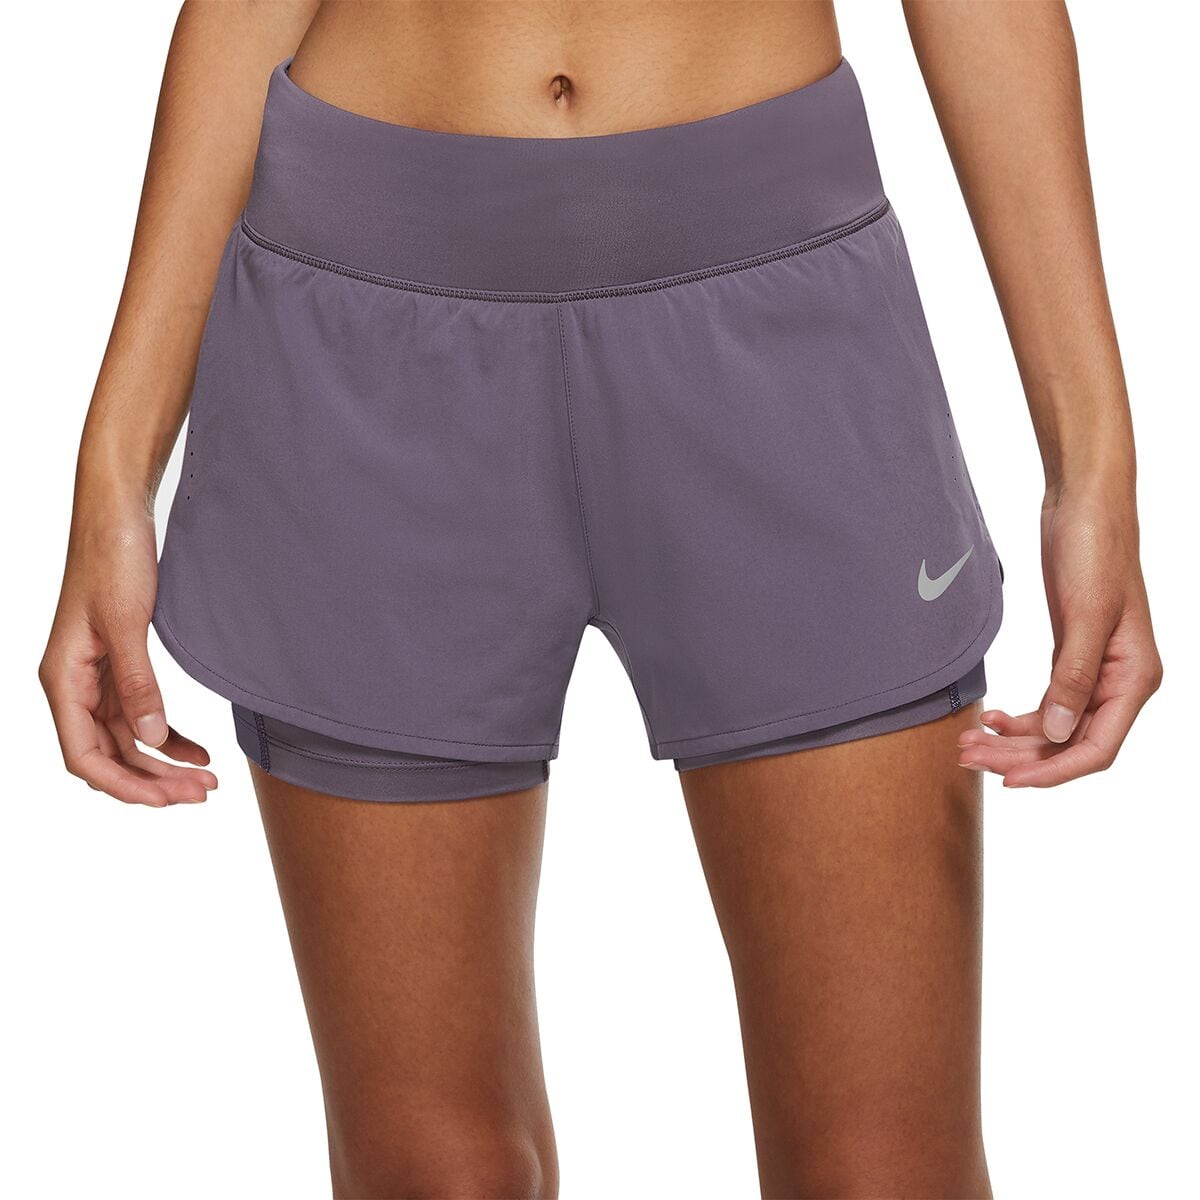 Nike 2-in-1 Short Women's - Clothing